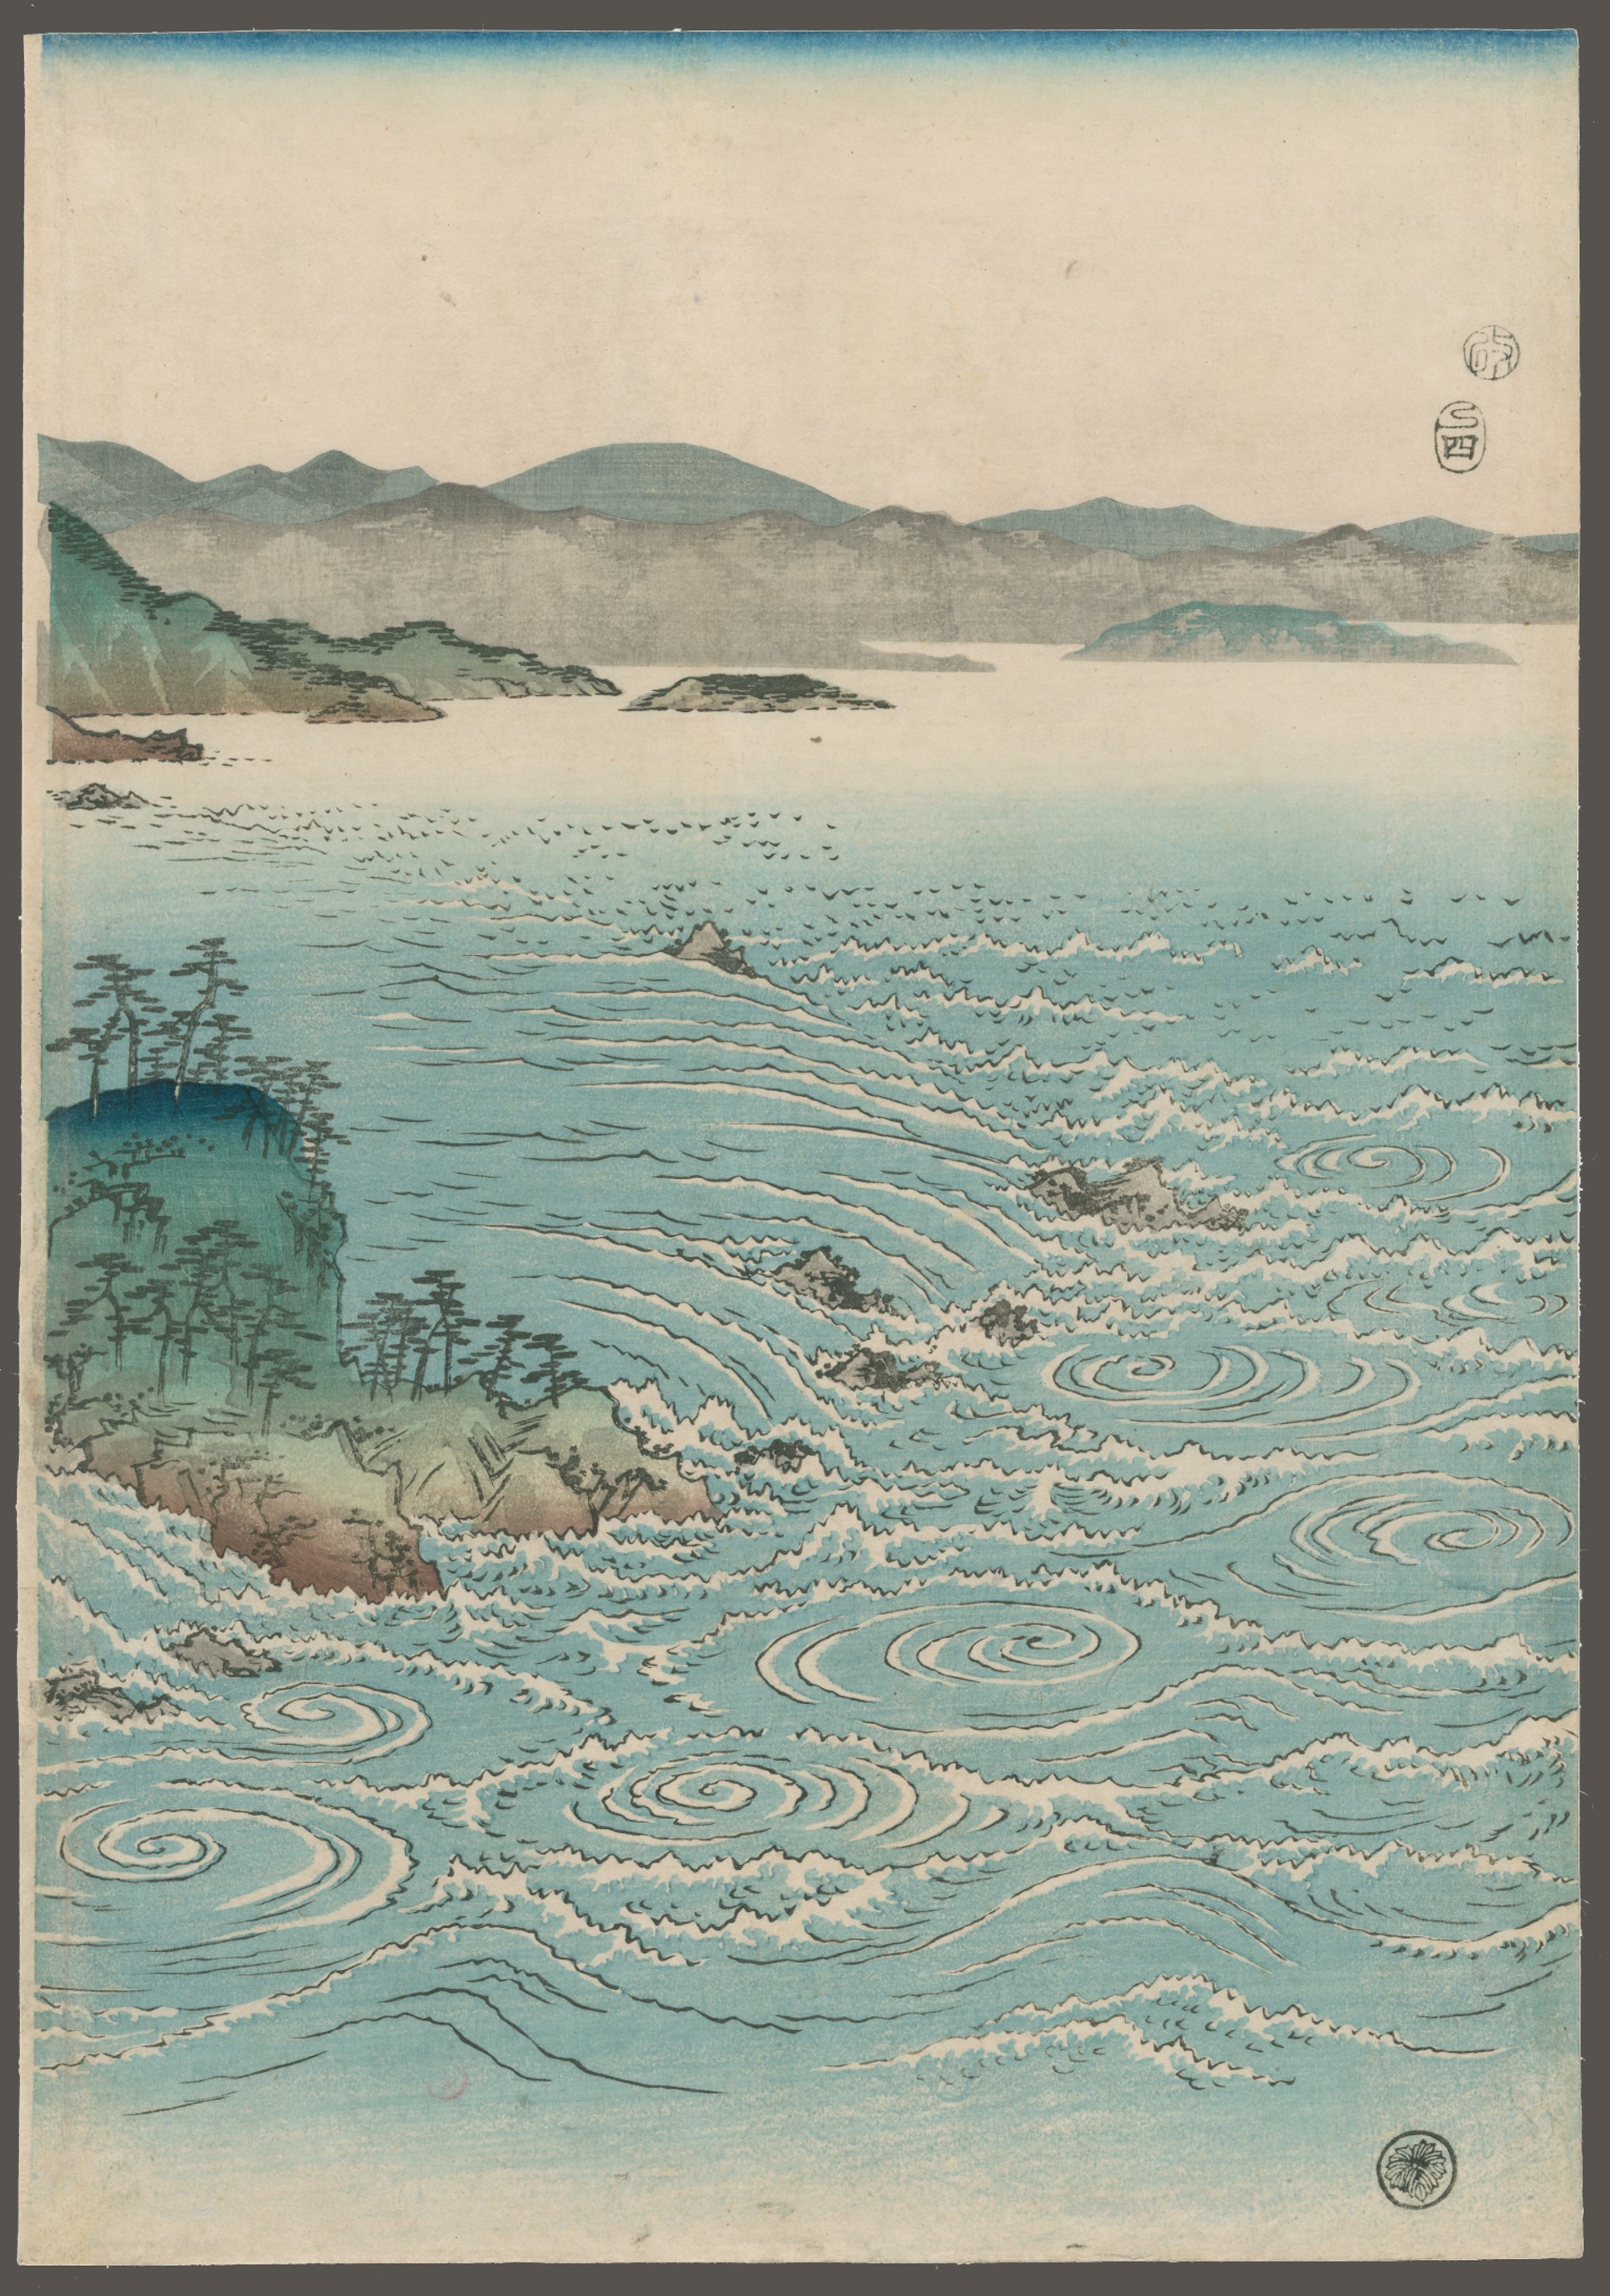 Flower - Whirlpools at Naruta Straight Snow, Mon and Flower (Setsugekka) by Hiroshige